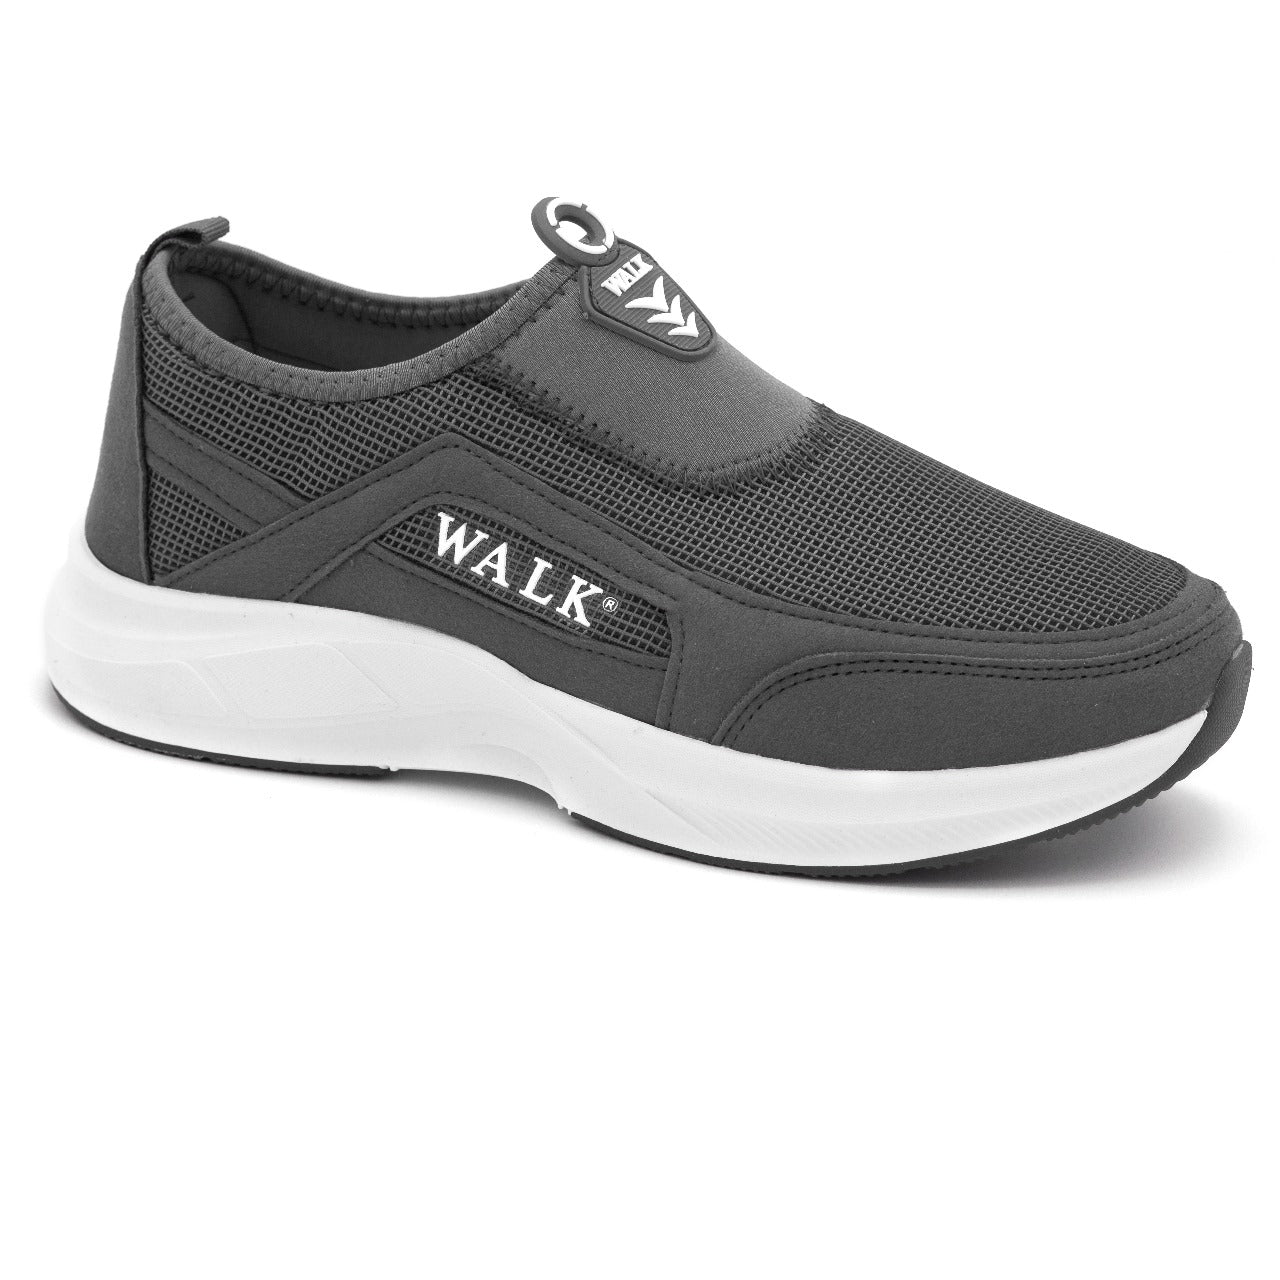 Men walk shoes